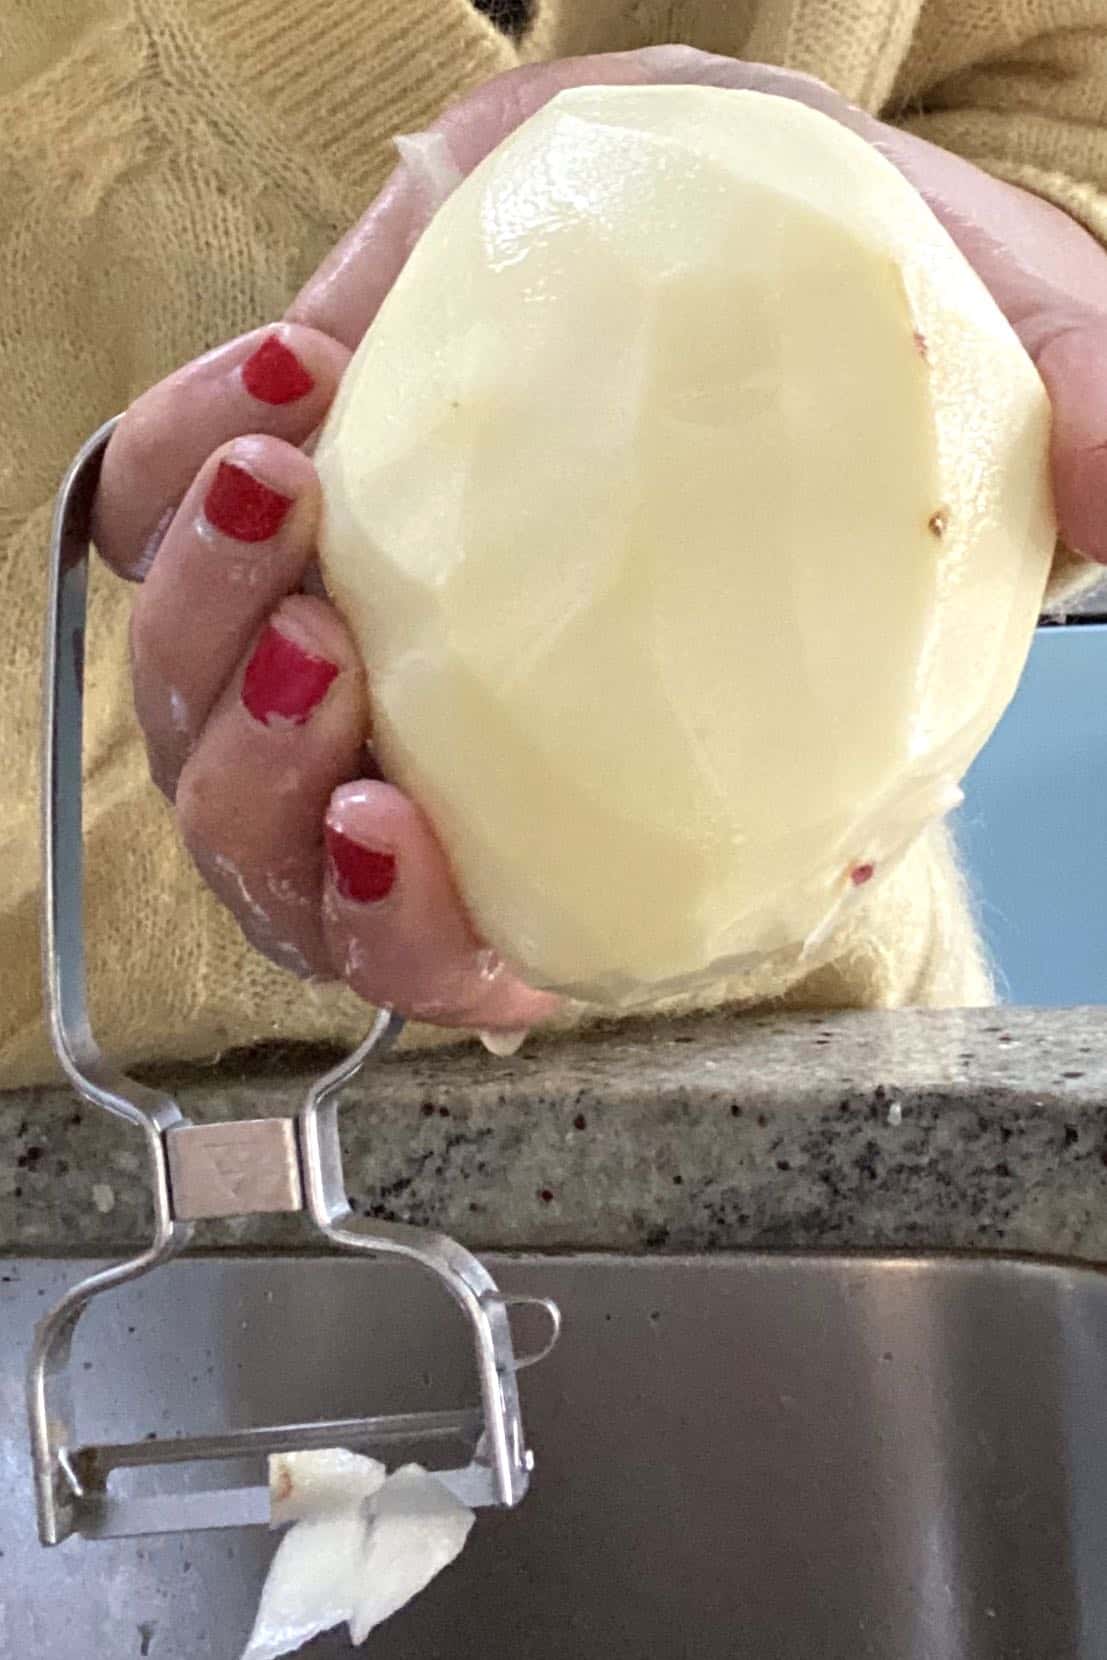 A hand holding a peeled potato